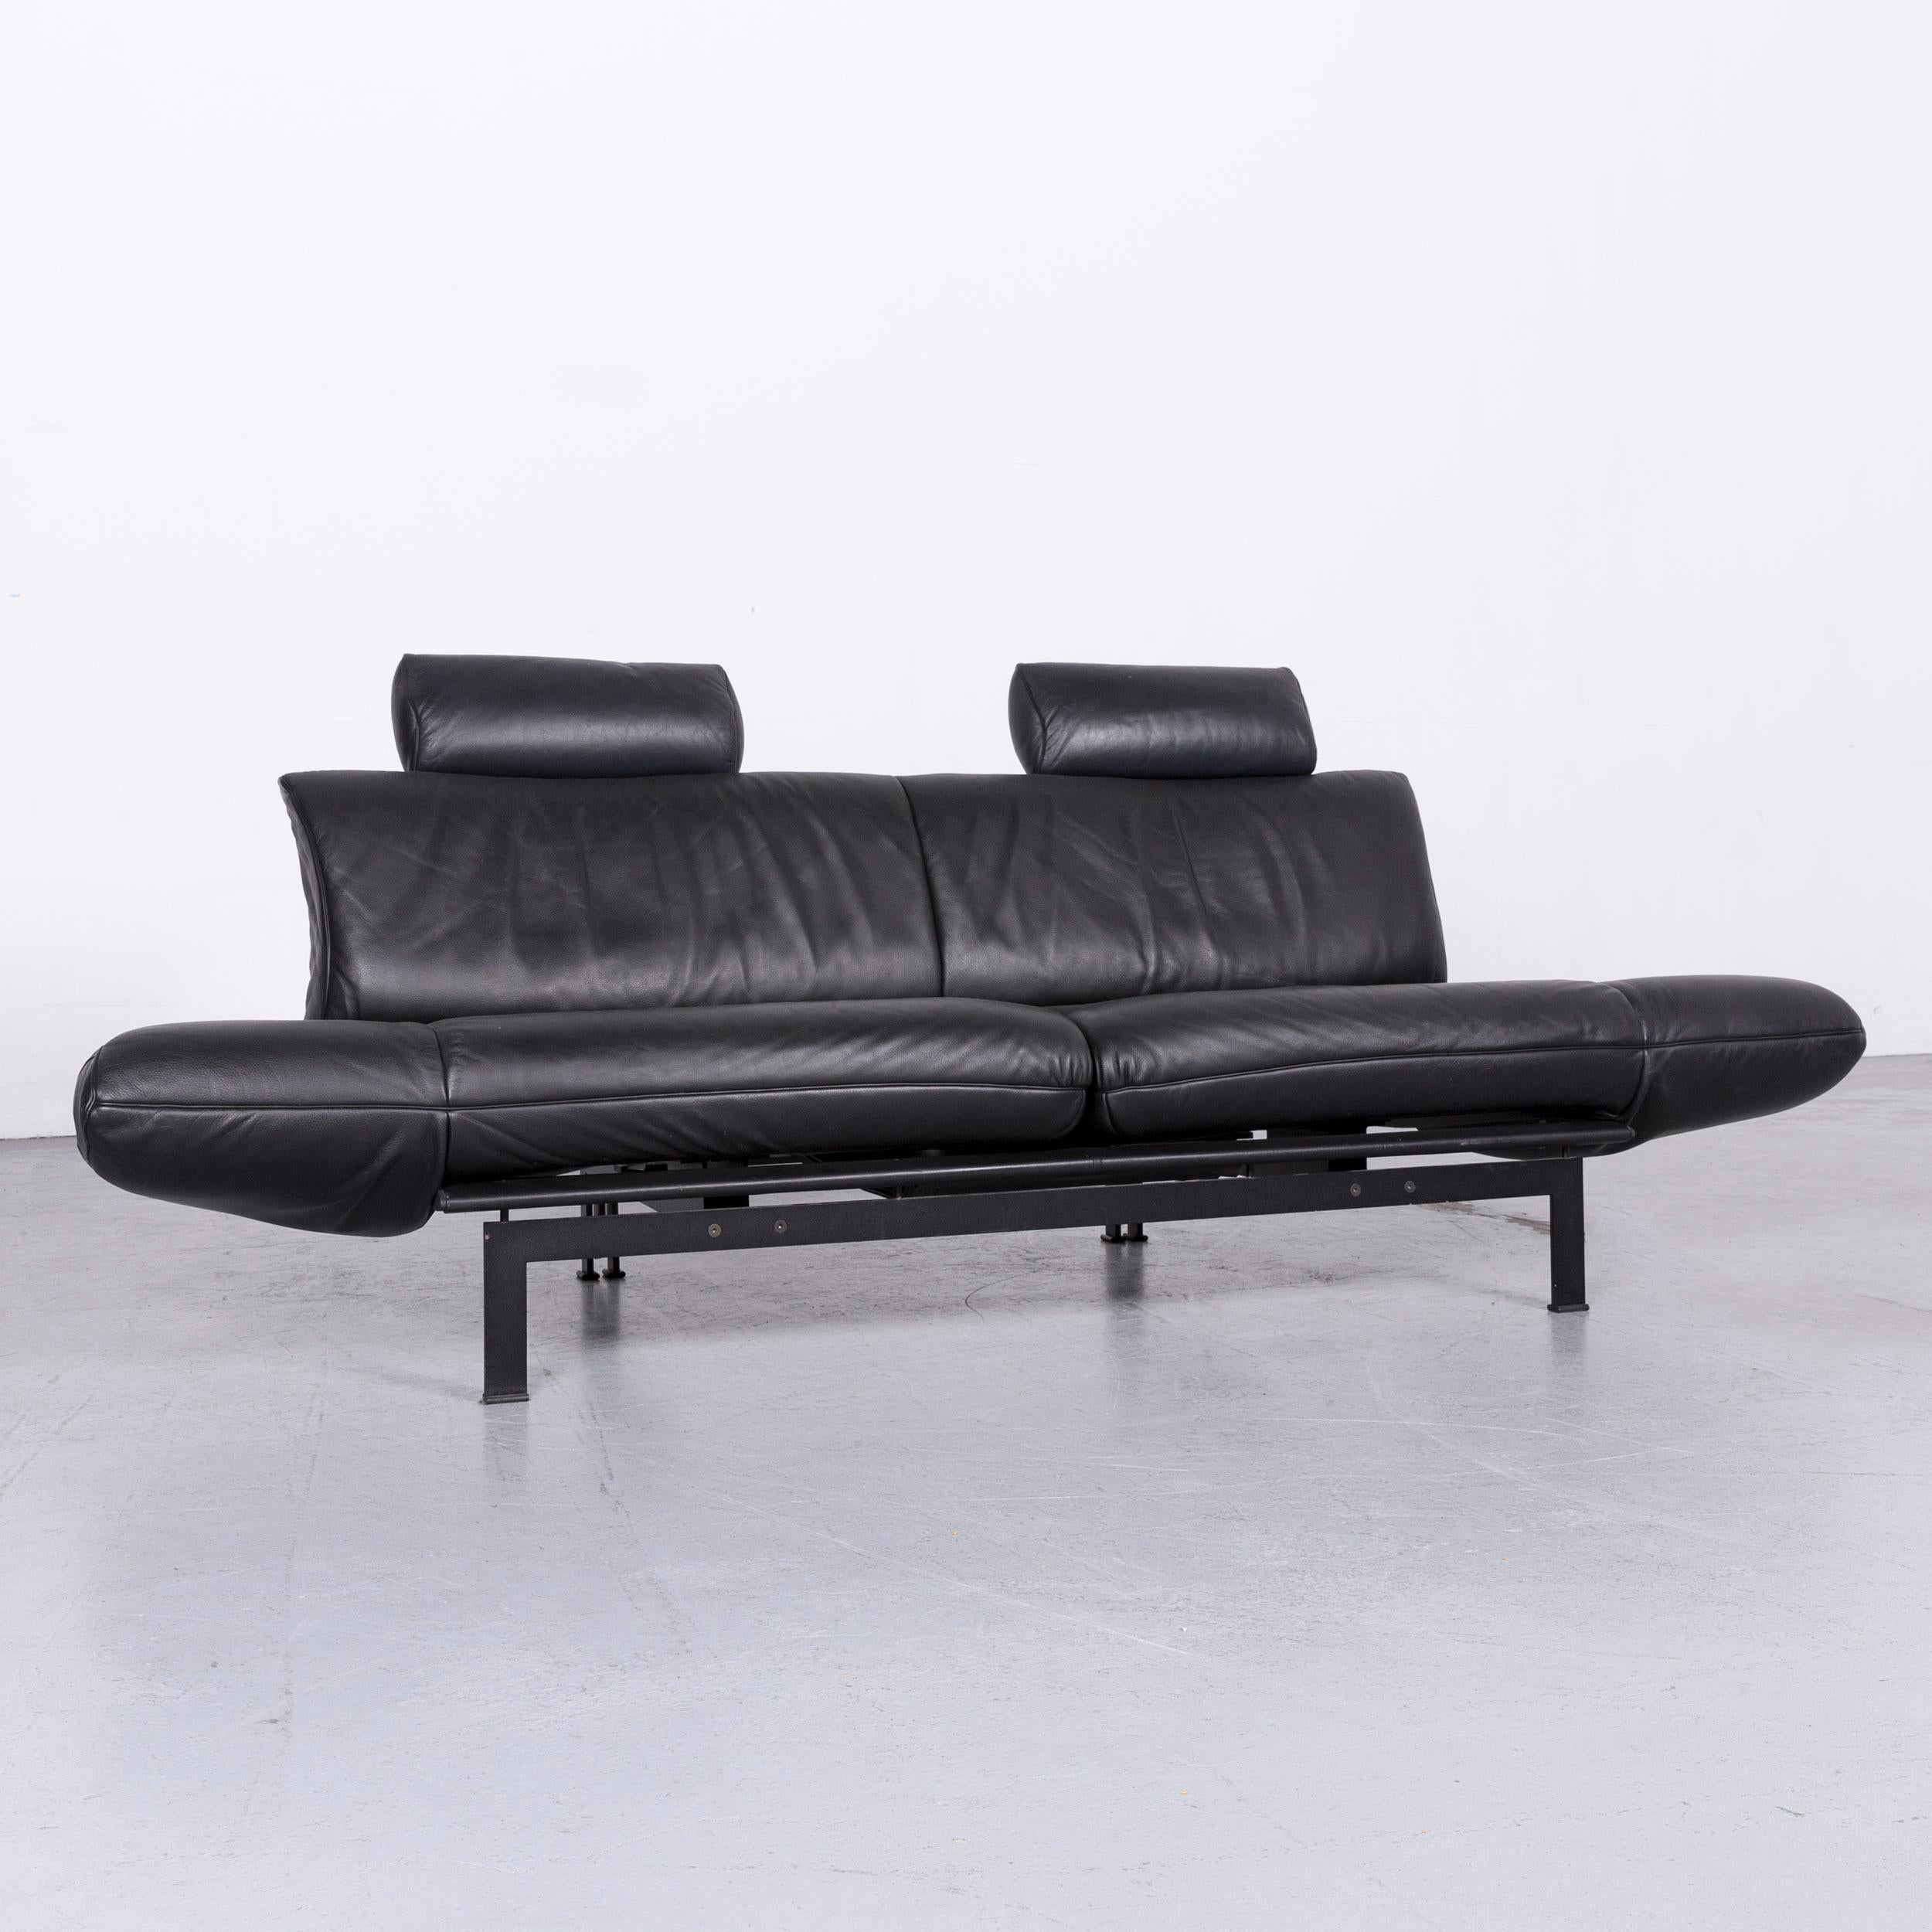 German De Sede Ds 140 Designer Leather Sofa Black Three-Seat Function Modern For Sale